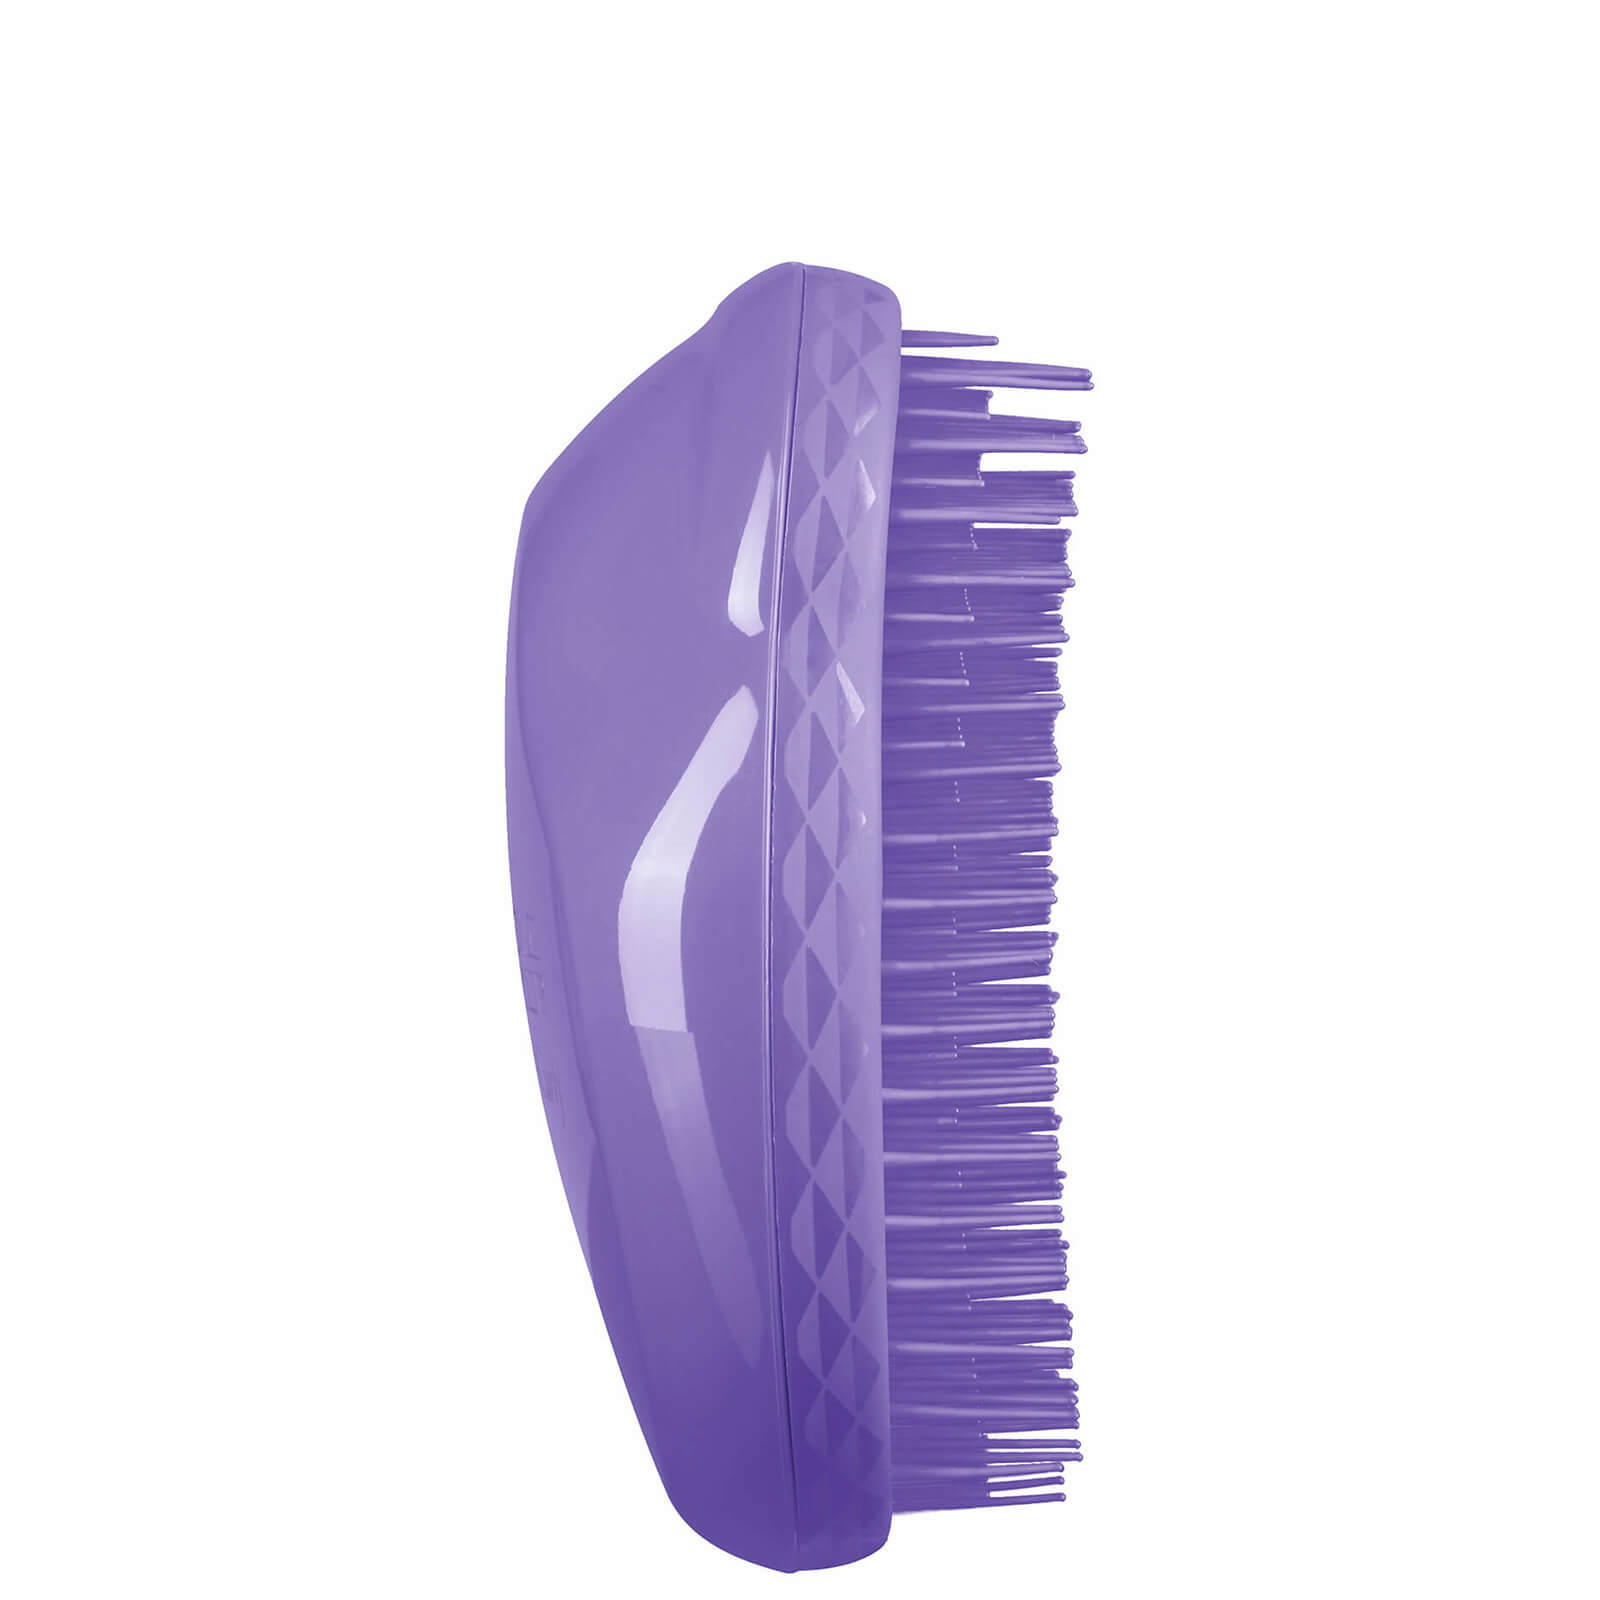 Image of Tangle Teezer Thick and Curly spazzola districante capelli crespi e ricci - Lilac Fondant